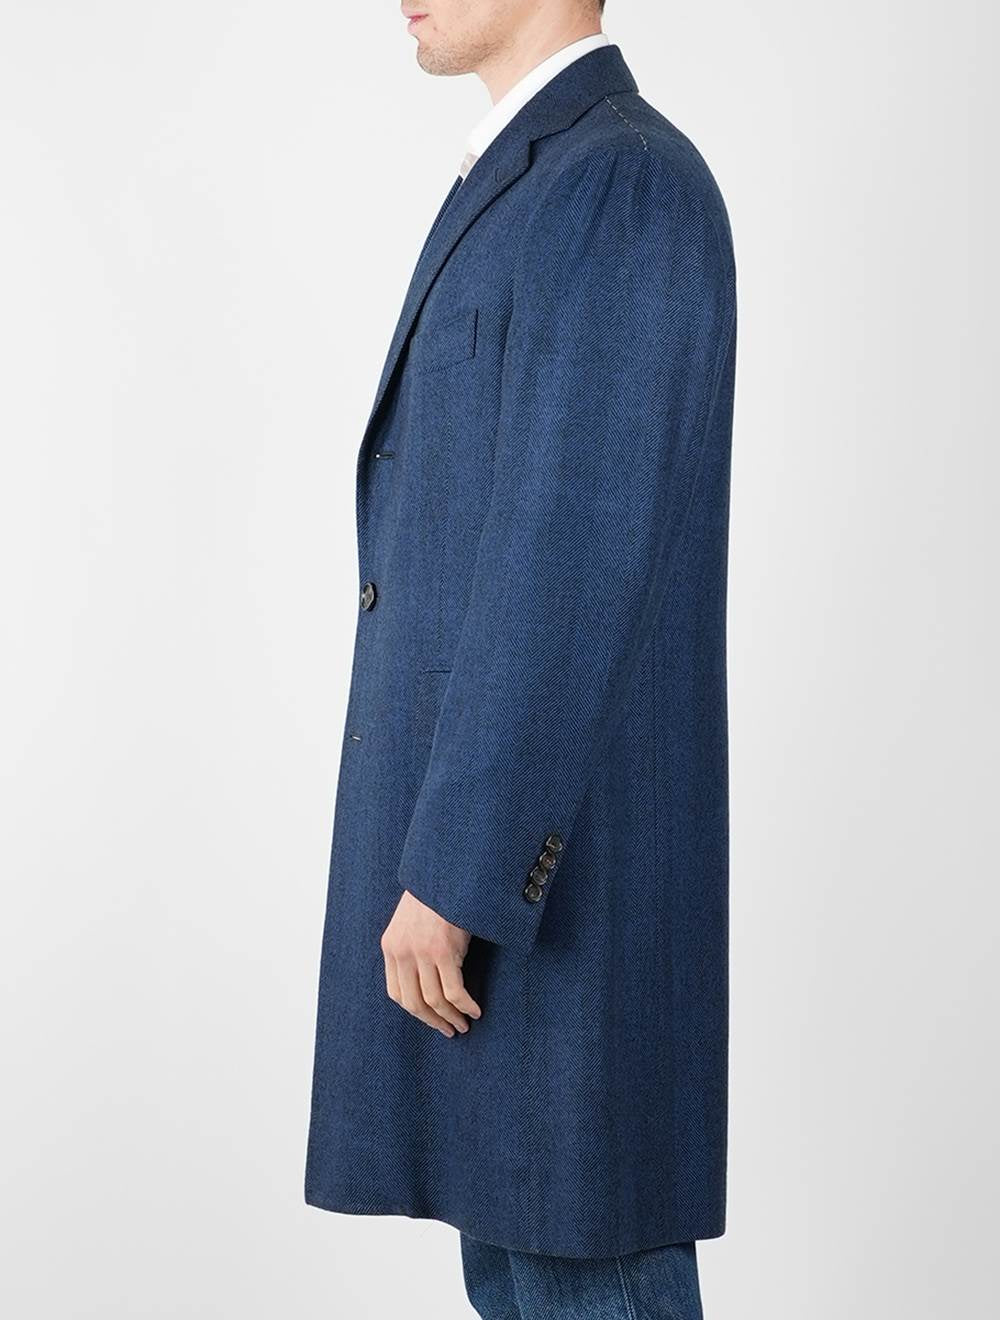 Cesare Attolini Blue Lambswool Wool Kašmírový kabát